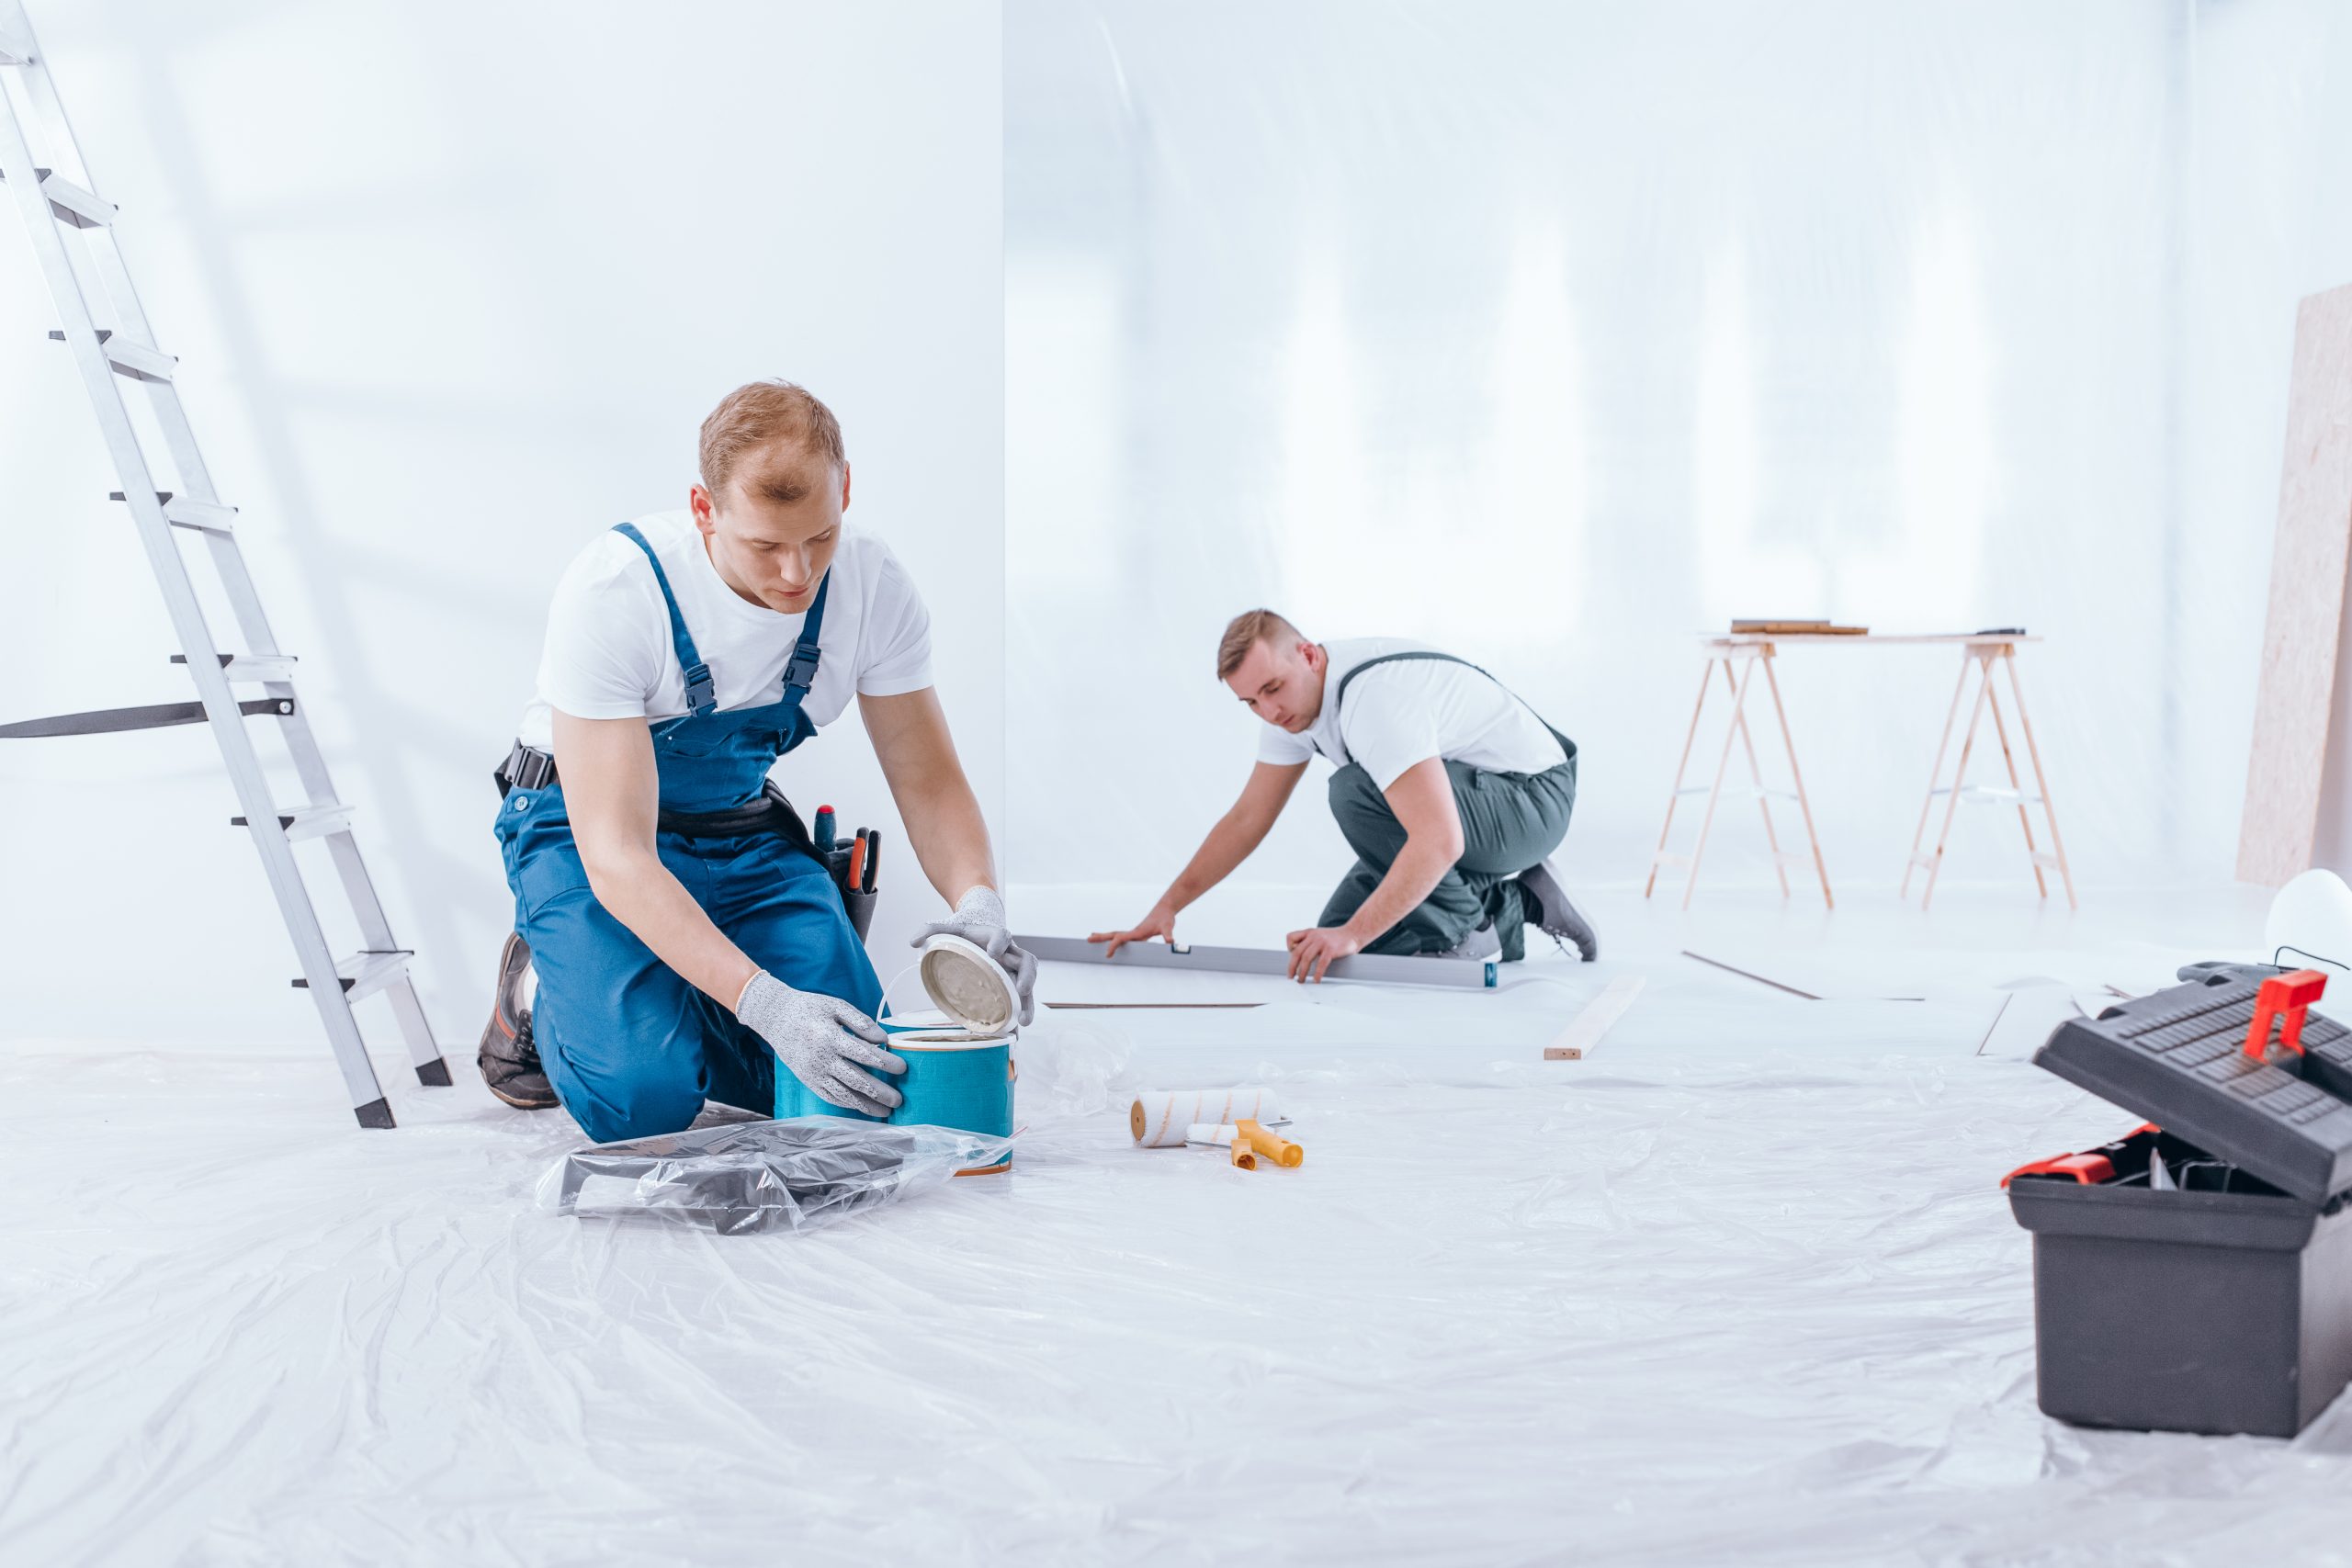 painter during interior finishing work 2022 03 30 20 23 47 utc scaled - Home